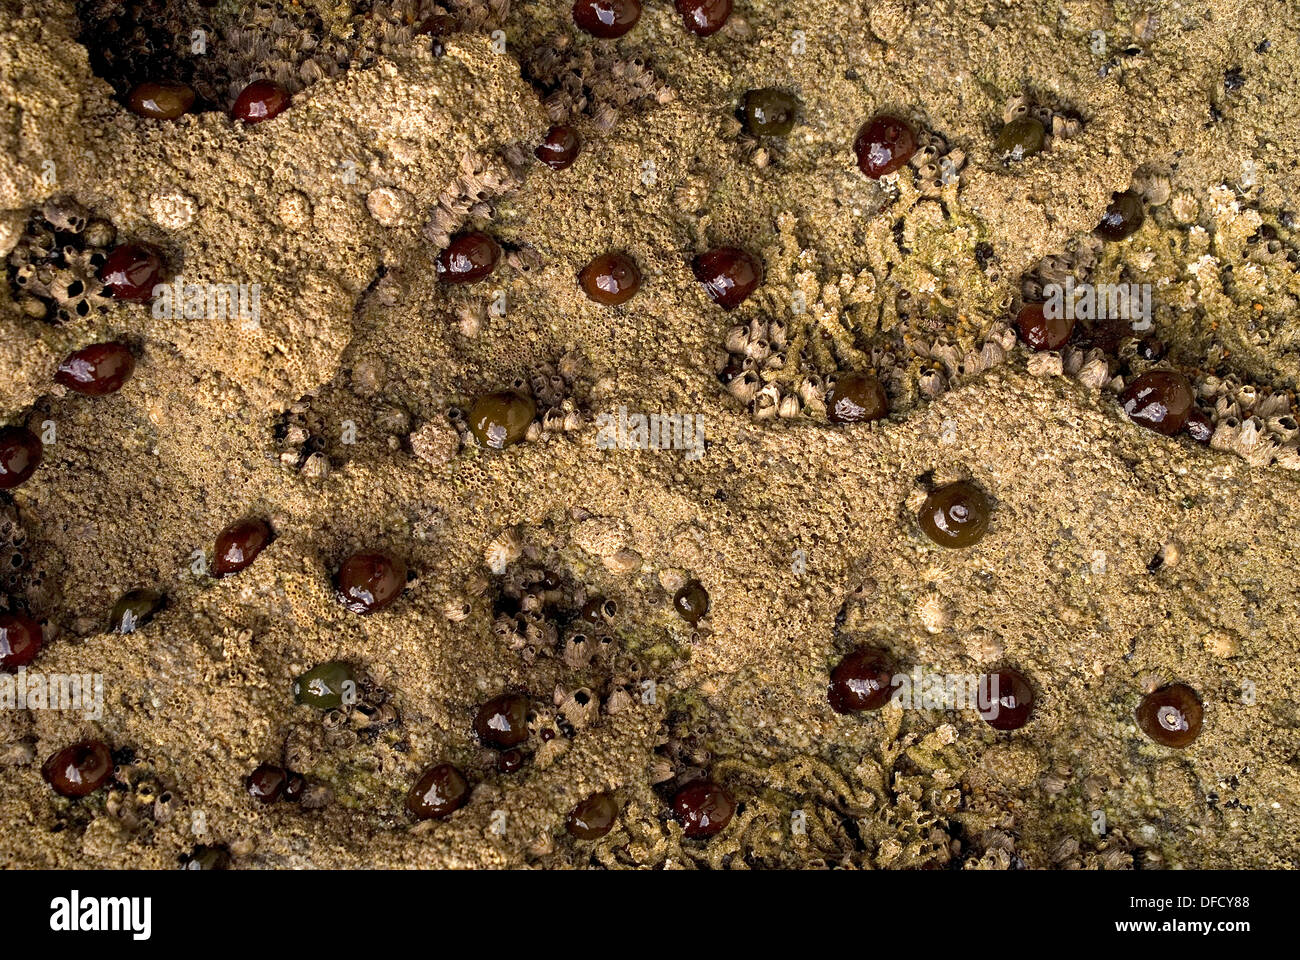 Anemoni Beadlet (Actinia equina) e acorn barnacles. Foto Stock